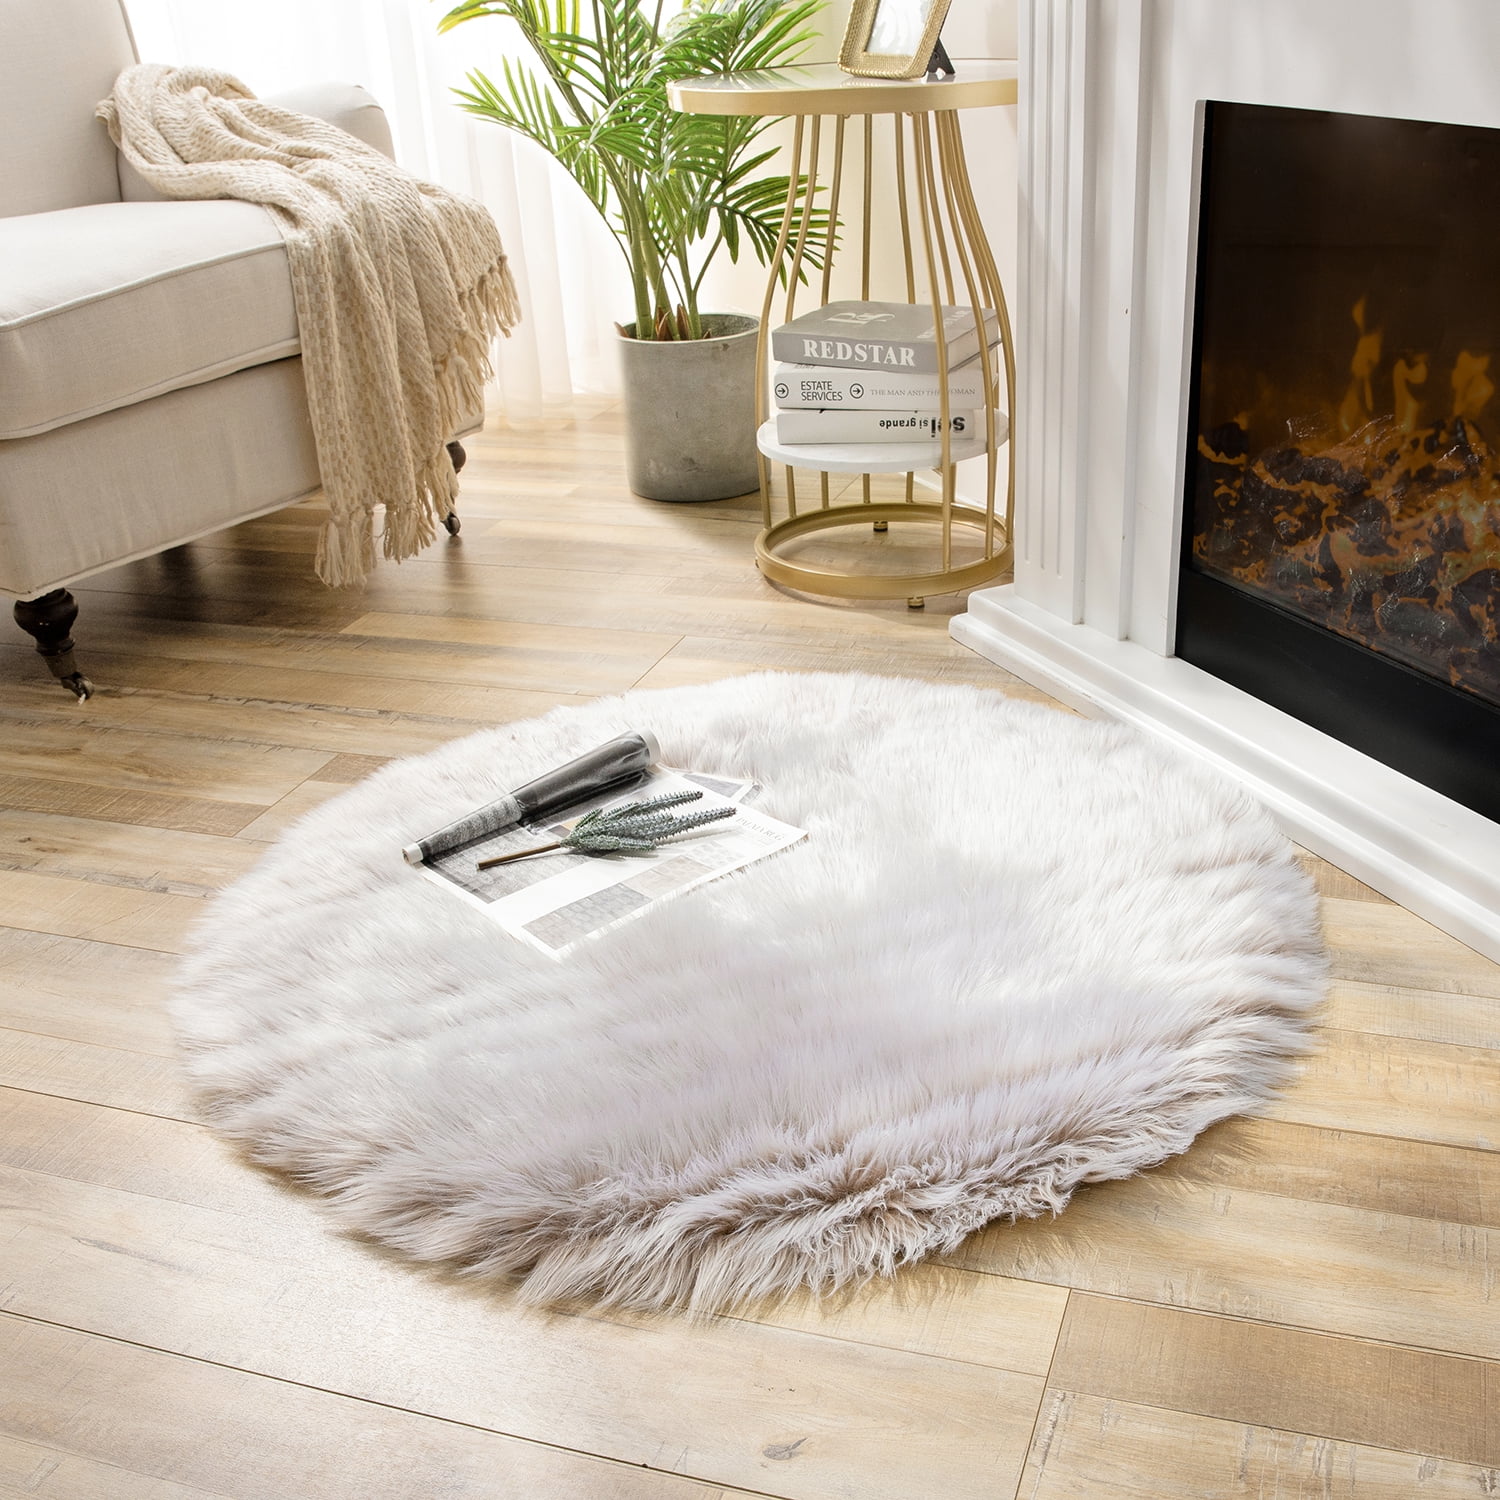 Details about   Fluffy Faux Fur Sheepskin Rug Floor Carpet Soft Non-Slip Bedroom Home Small Mats 